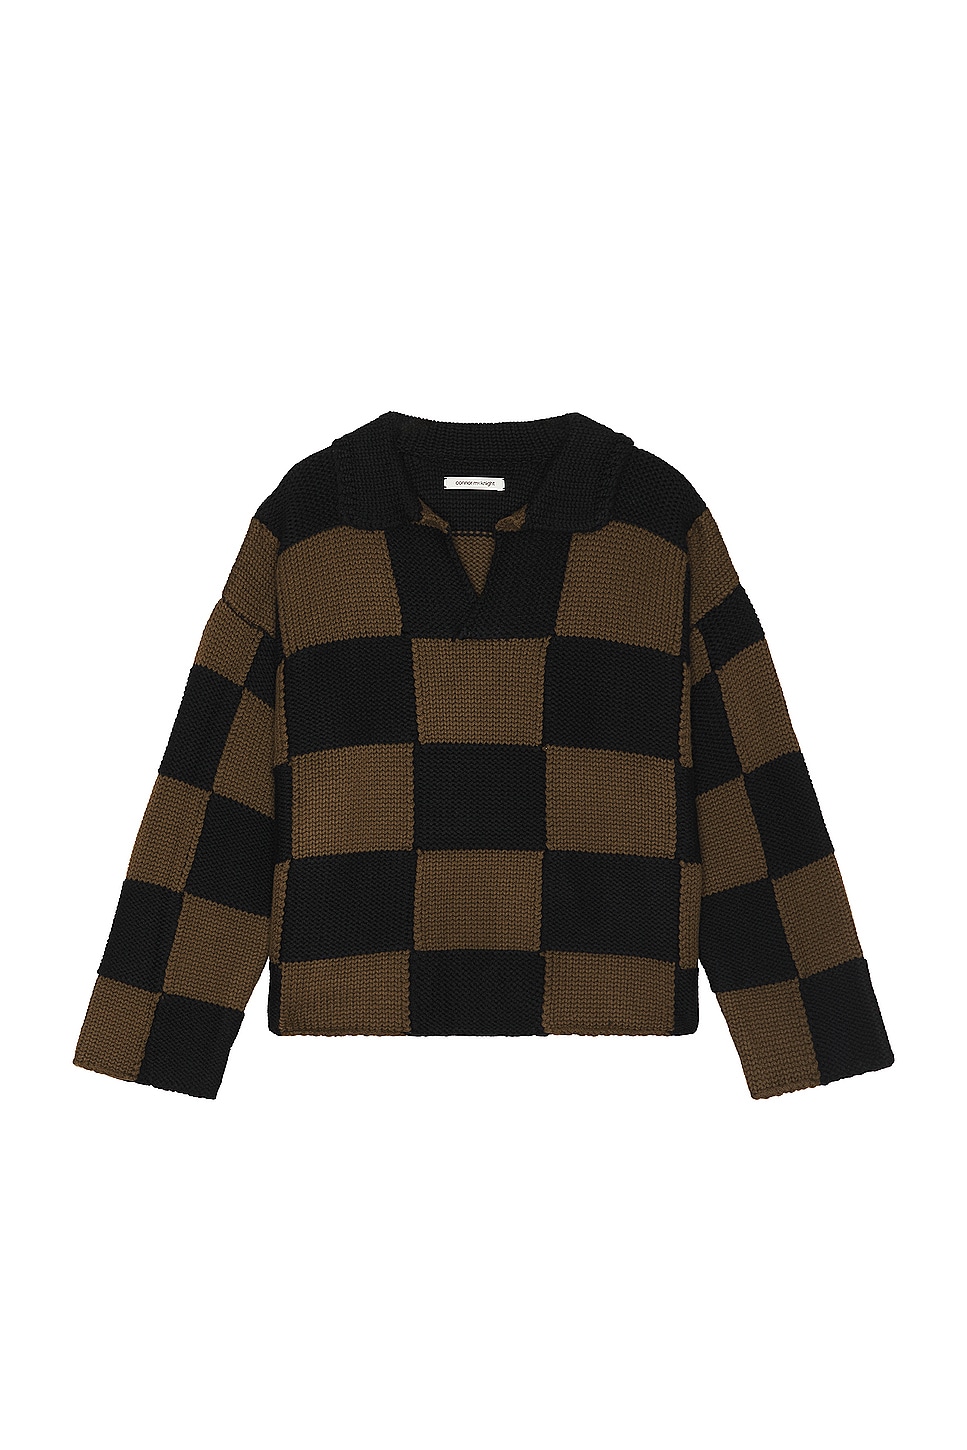 Image 1 of Connor McKnight Checkerboard Pullover Sweater in Black & Brown